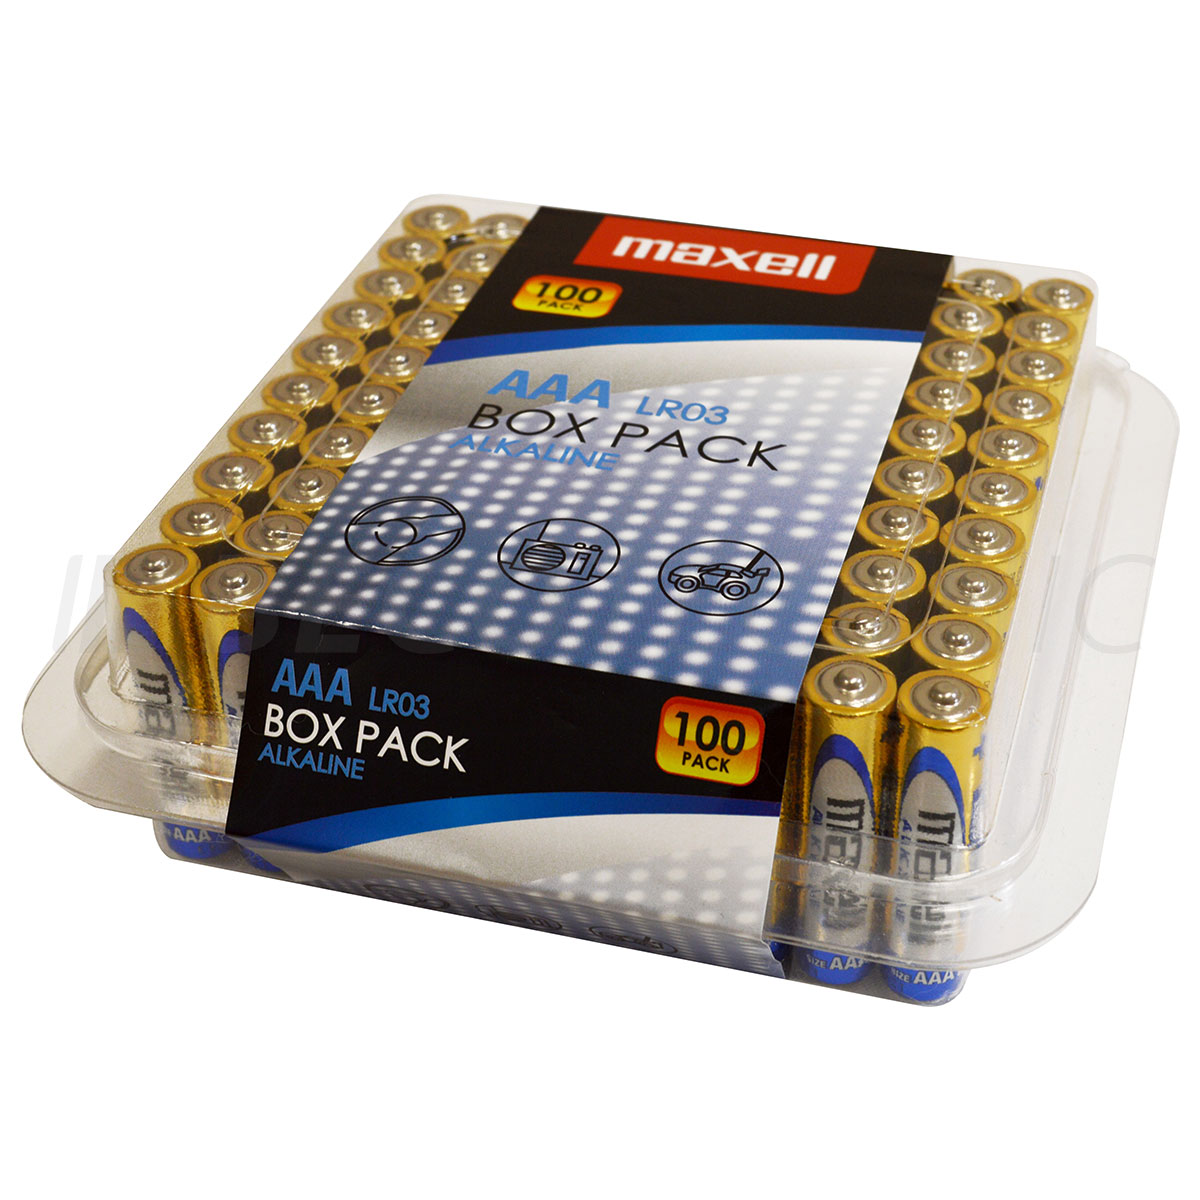 Maxell Alkaline LR03 AAA Micro 1,5 V Batterie, 100 Stk. im Box Pack